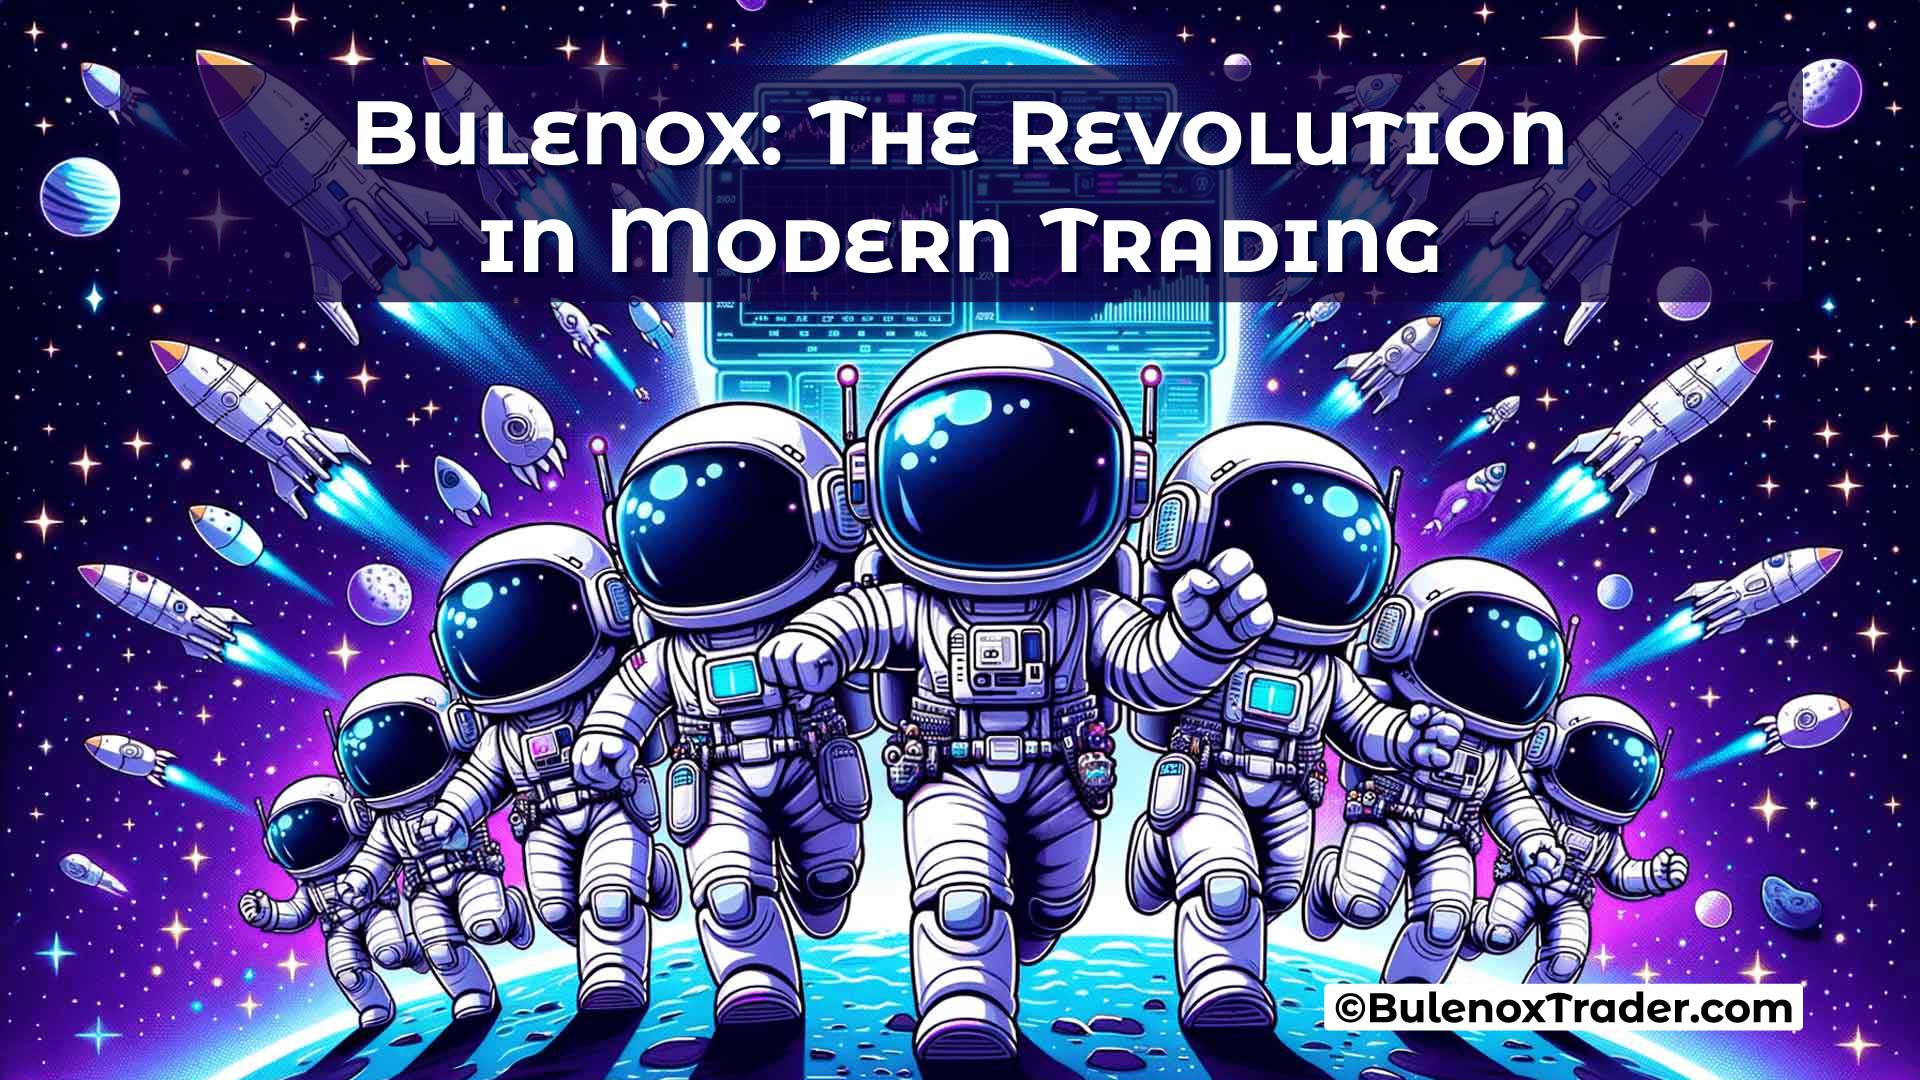 Bulenox-The-Revolution-in-Modern-Trading-on-Bulenox-Trader-Website